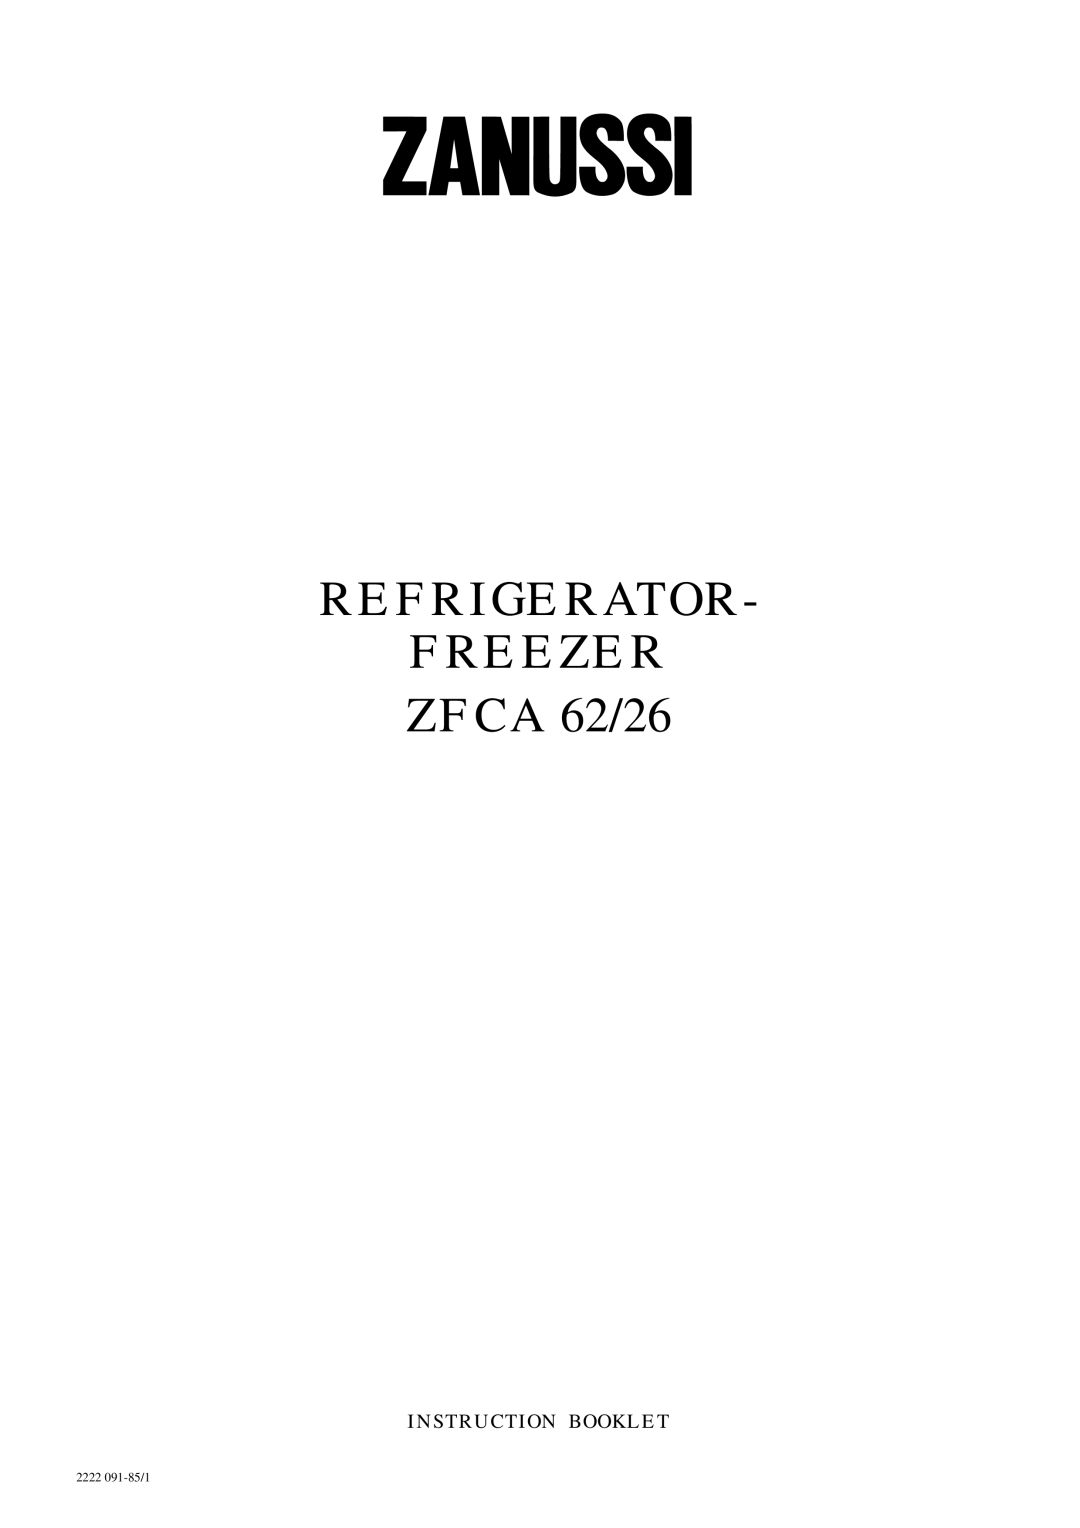 Zanussi manual REFRIGERATOR FREEZER ZFCA 62/26, Instruction Booklet, 2222 091-85/1 